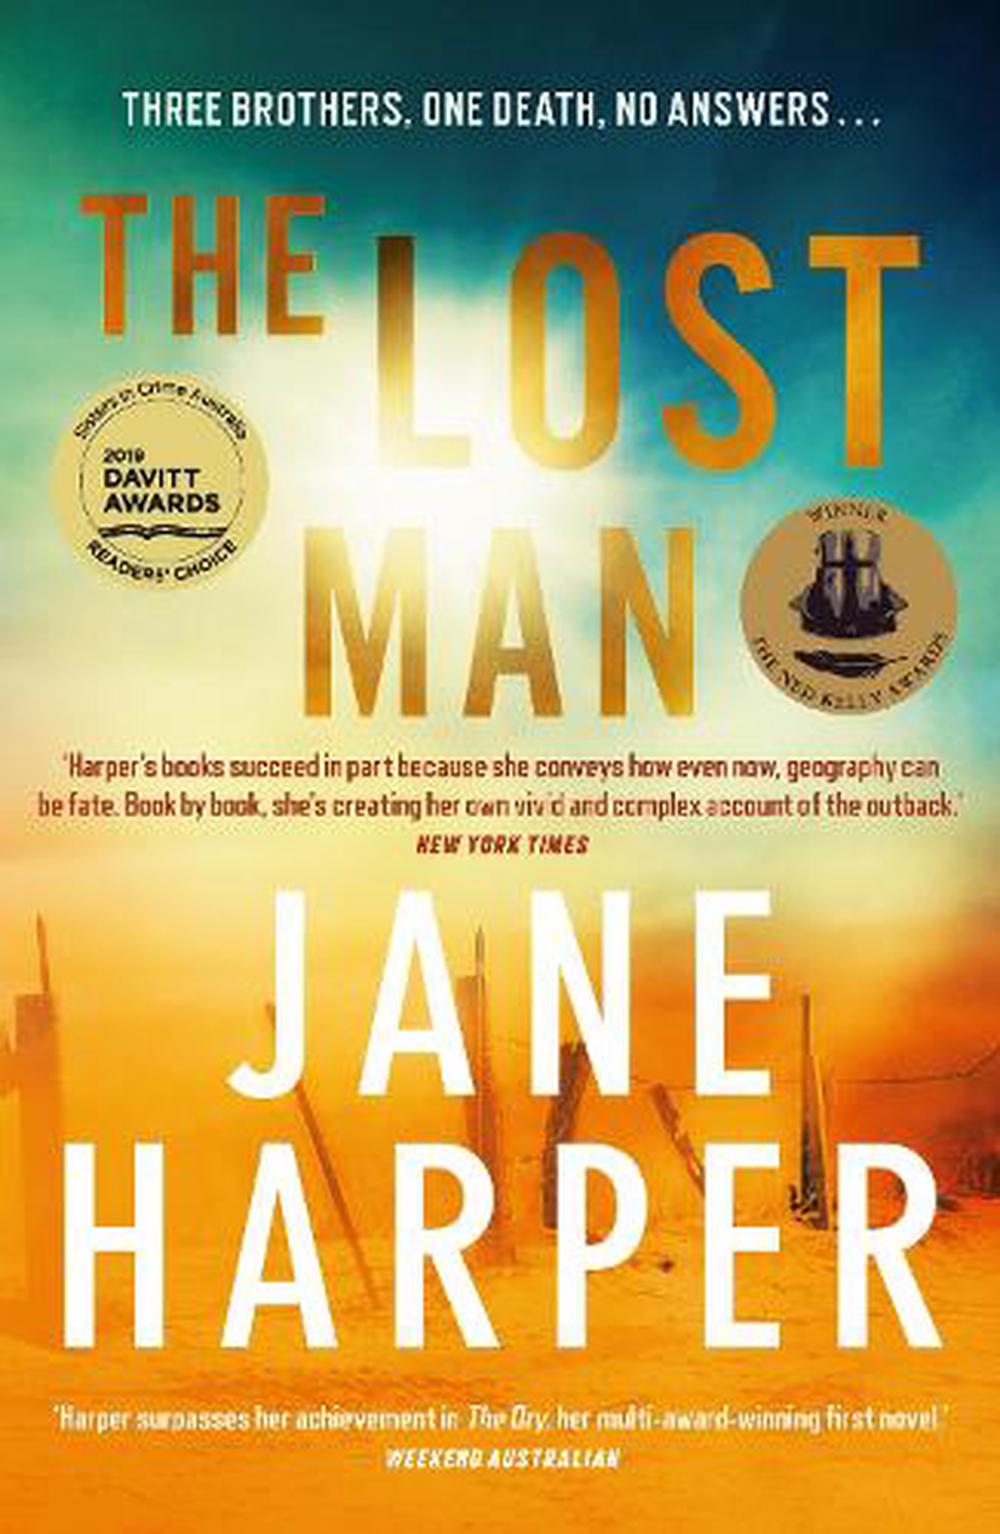 jane harper the lost man